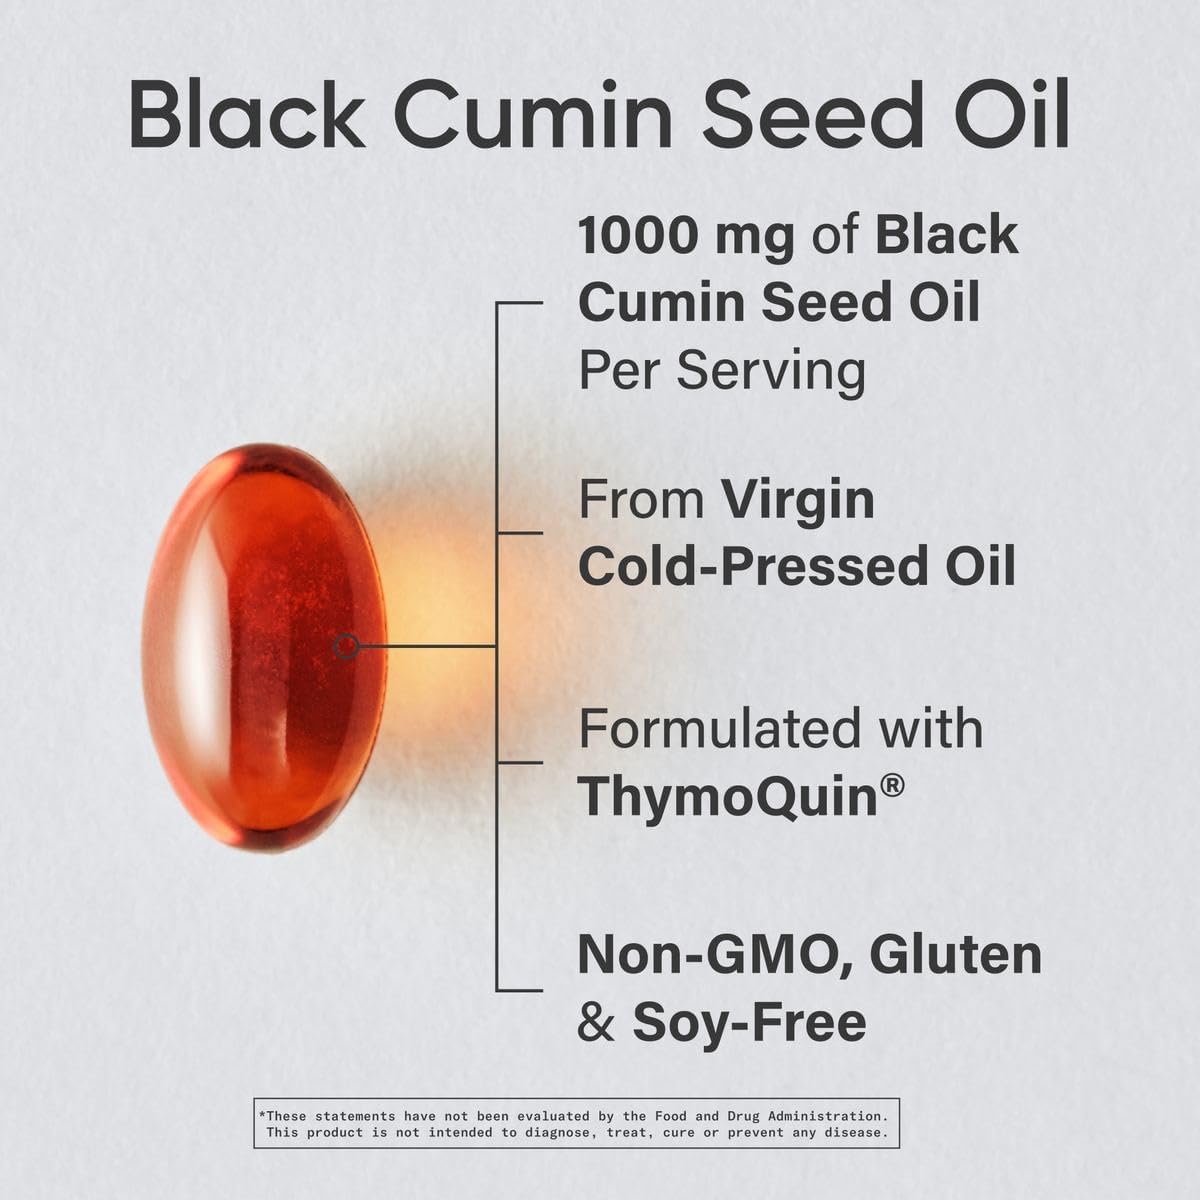 Sports Research Black Seed Oil 1000Mg. 60 Capsulas Blandas